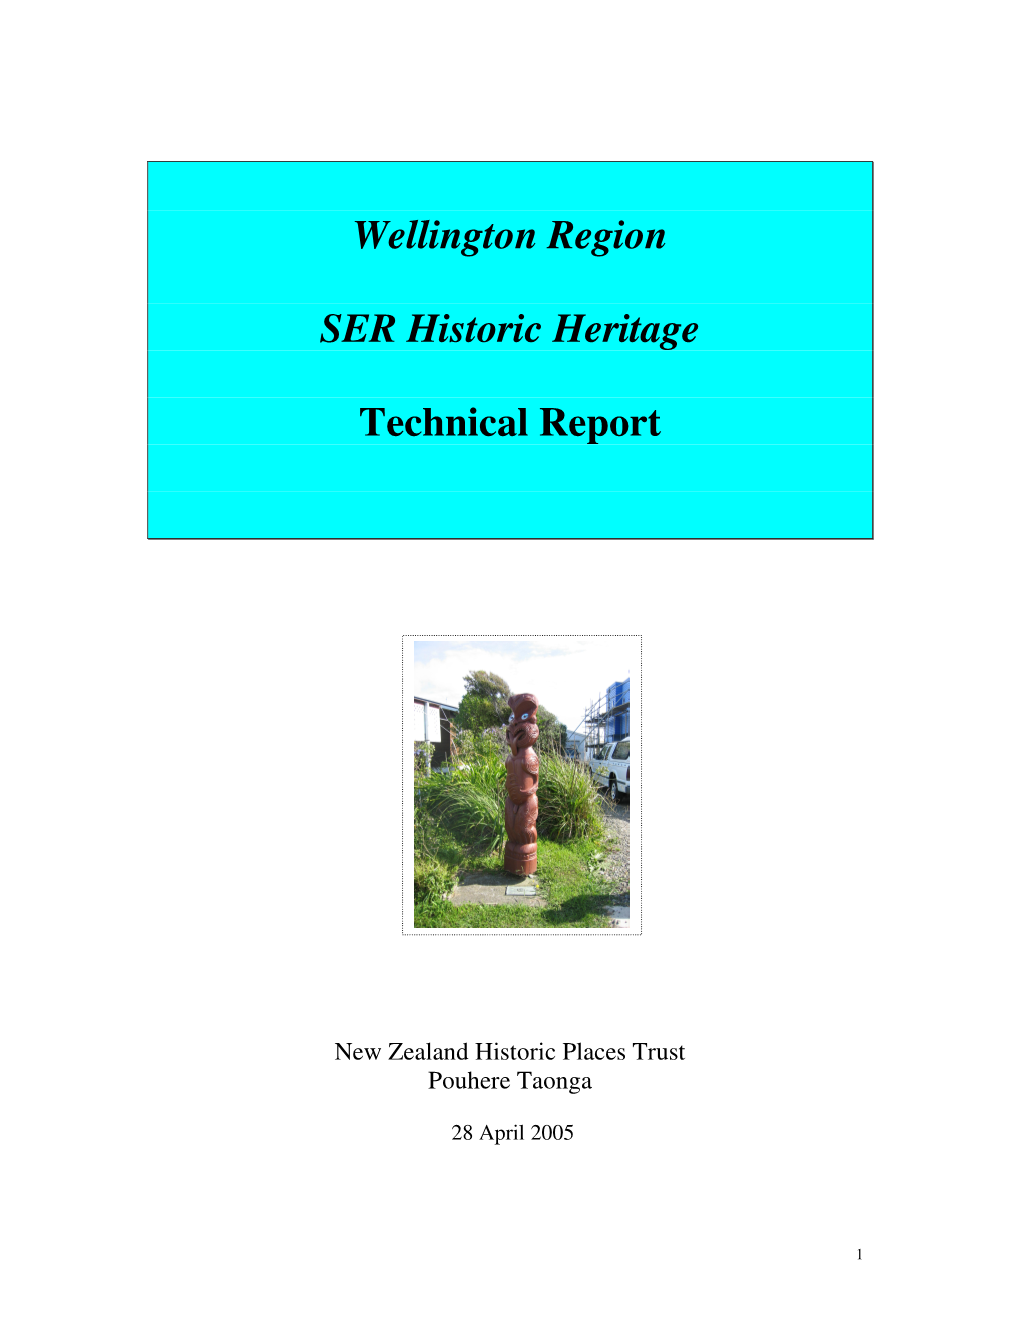 Wellington Region SER Historic Heritage Technical Report